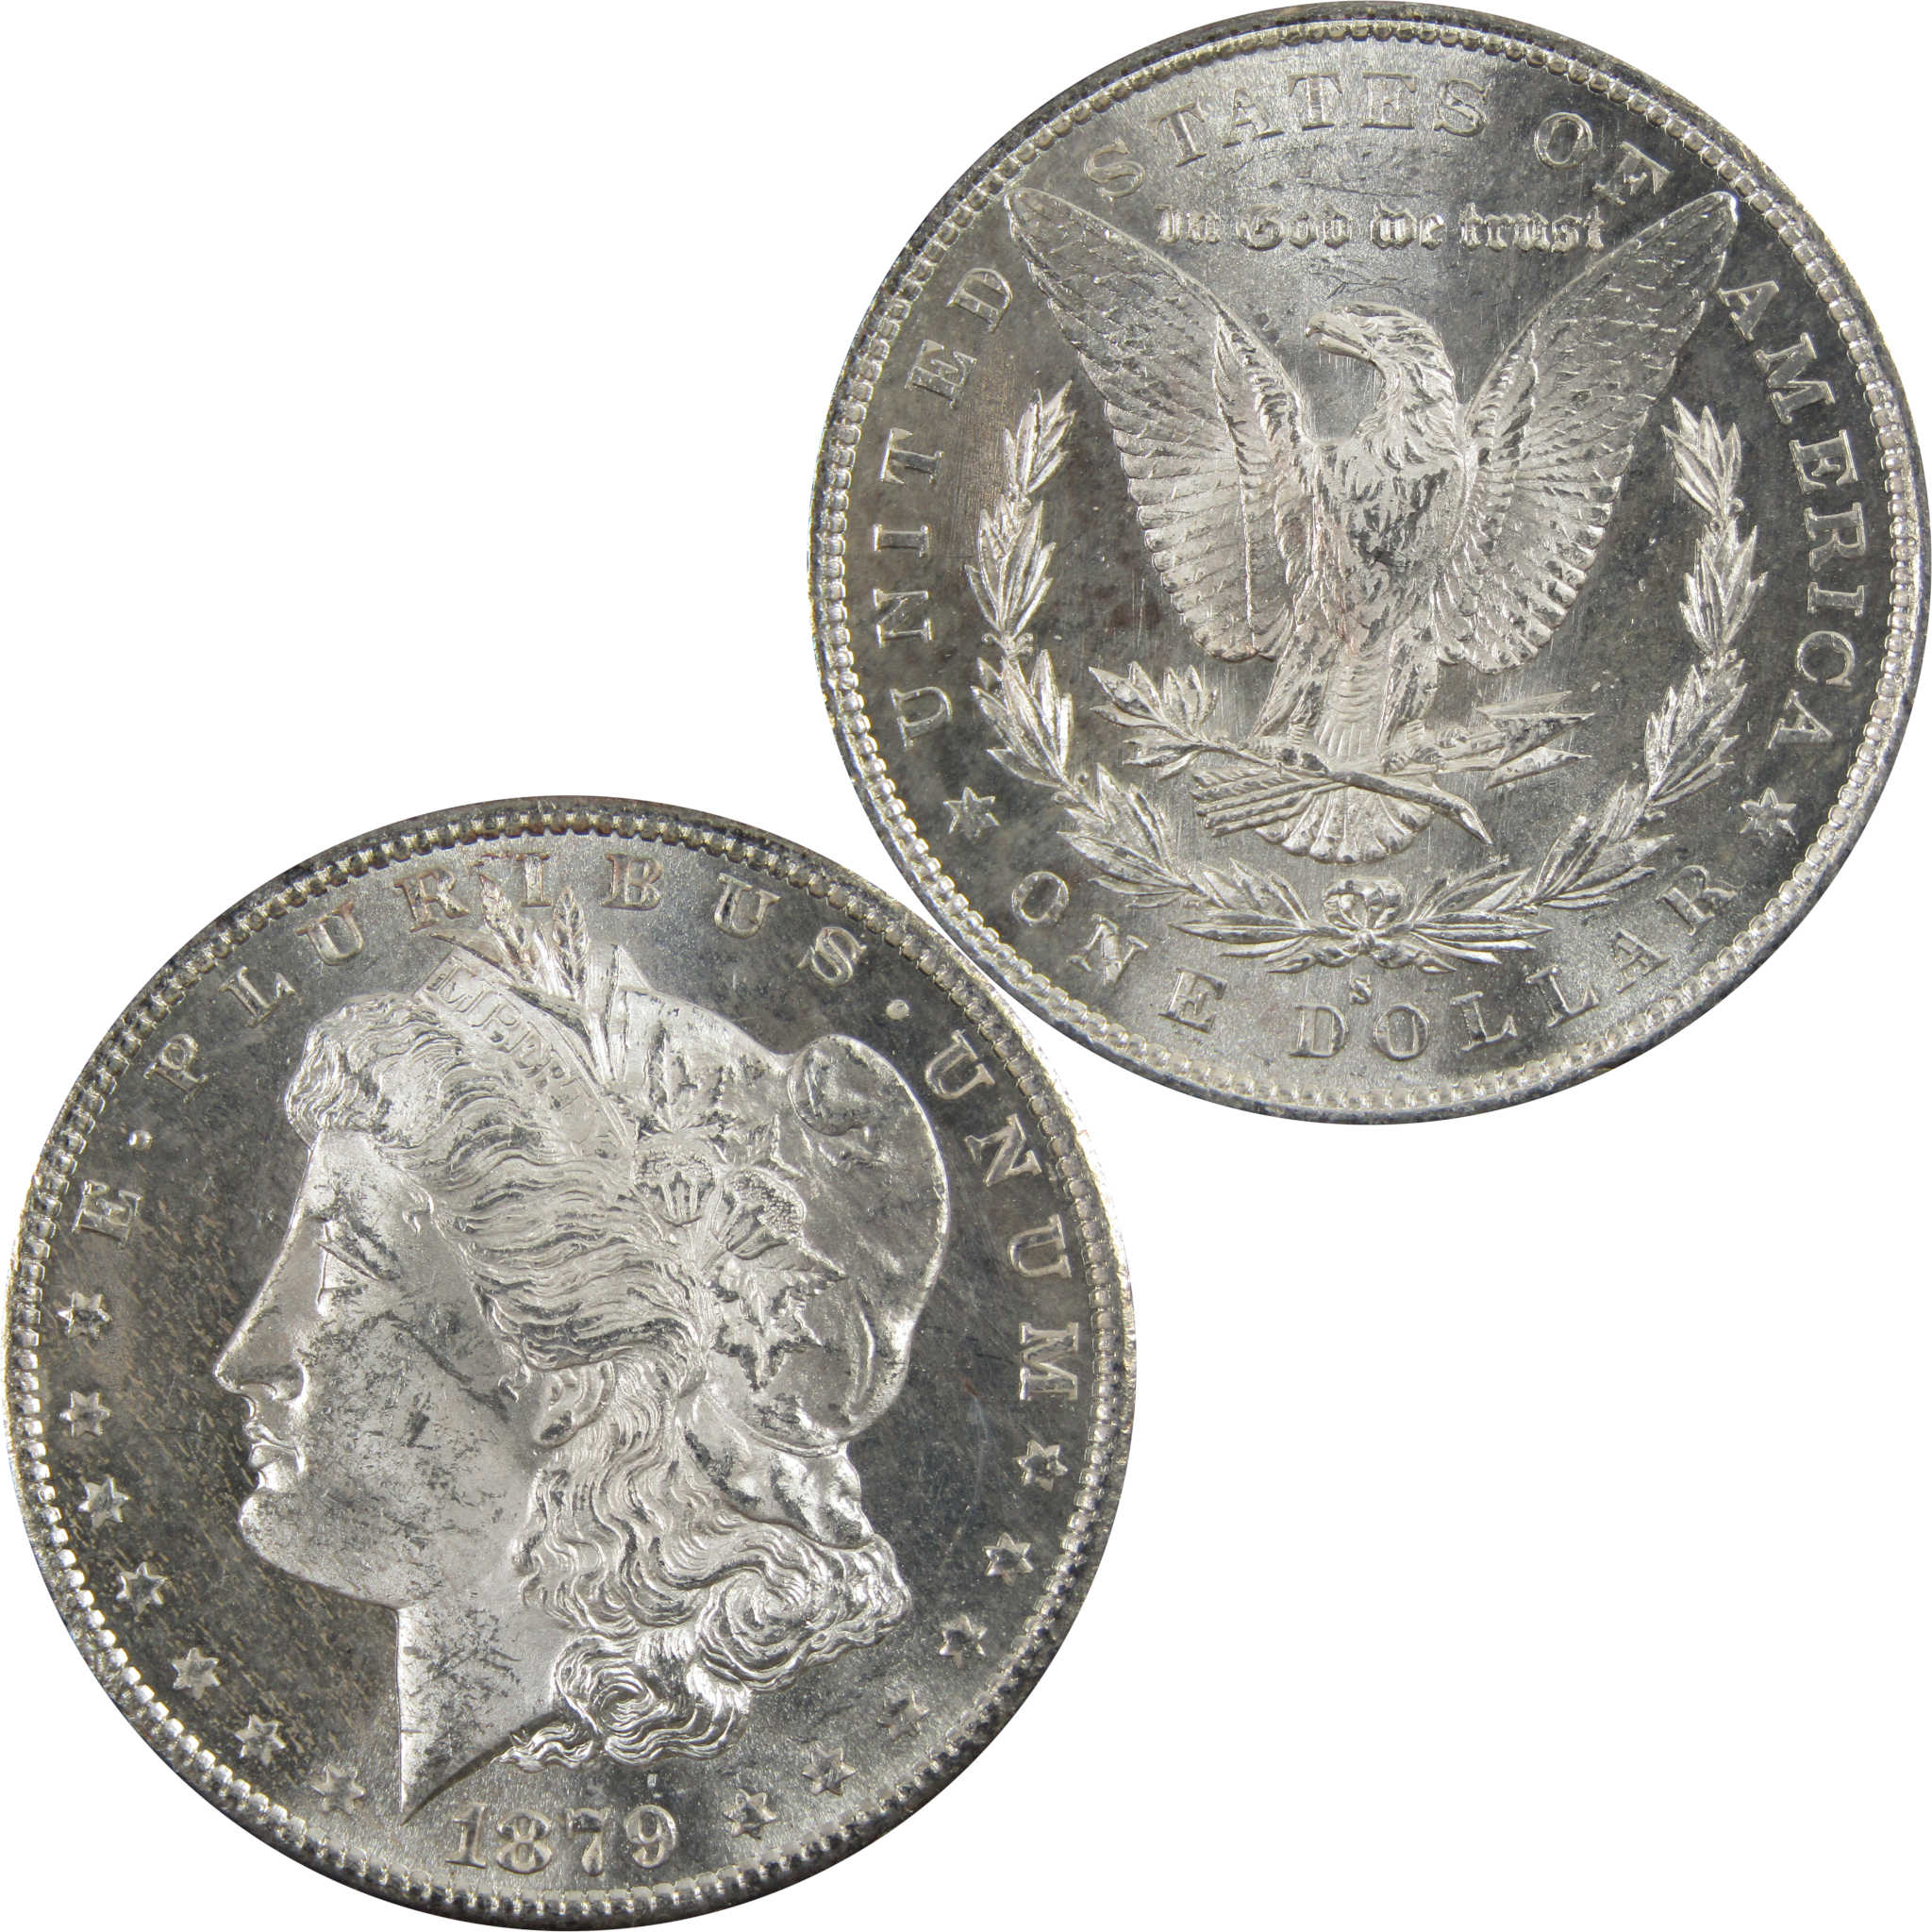 1879 S Morgan Dollar BU Uncirculated 90% Silver $1 Coin SKU:I5186 - Morgan coin - Morgan silver dollar - Morgan silver dollar for sale - Profile Coins &amp; Collectibles